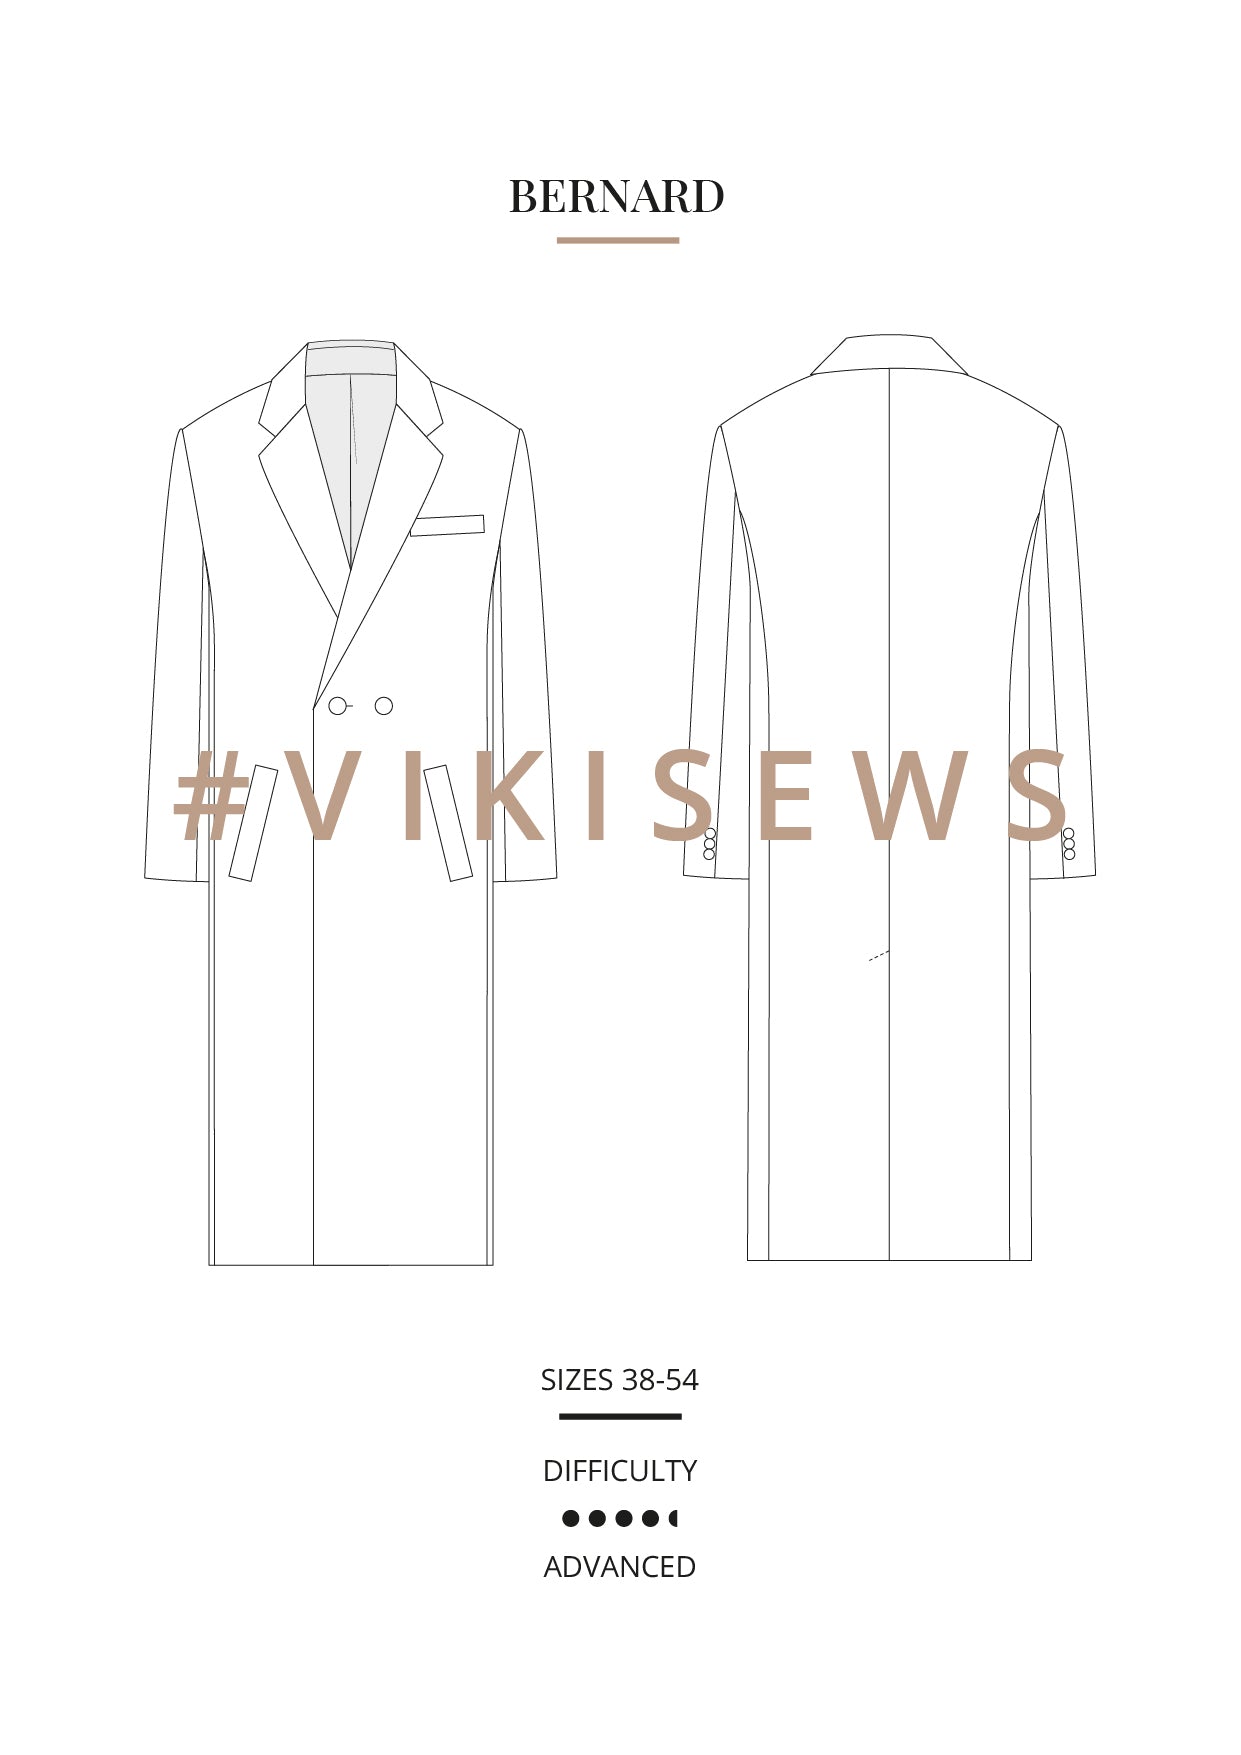 Vikisews Men's Bernard Coat PDF